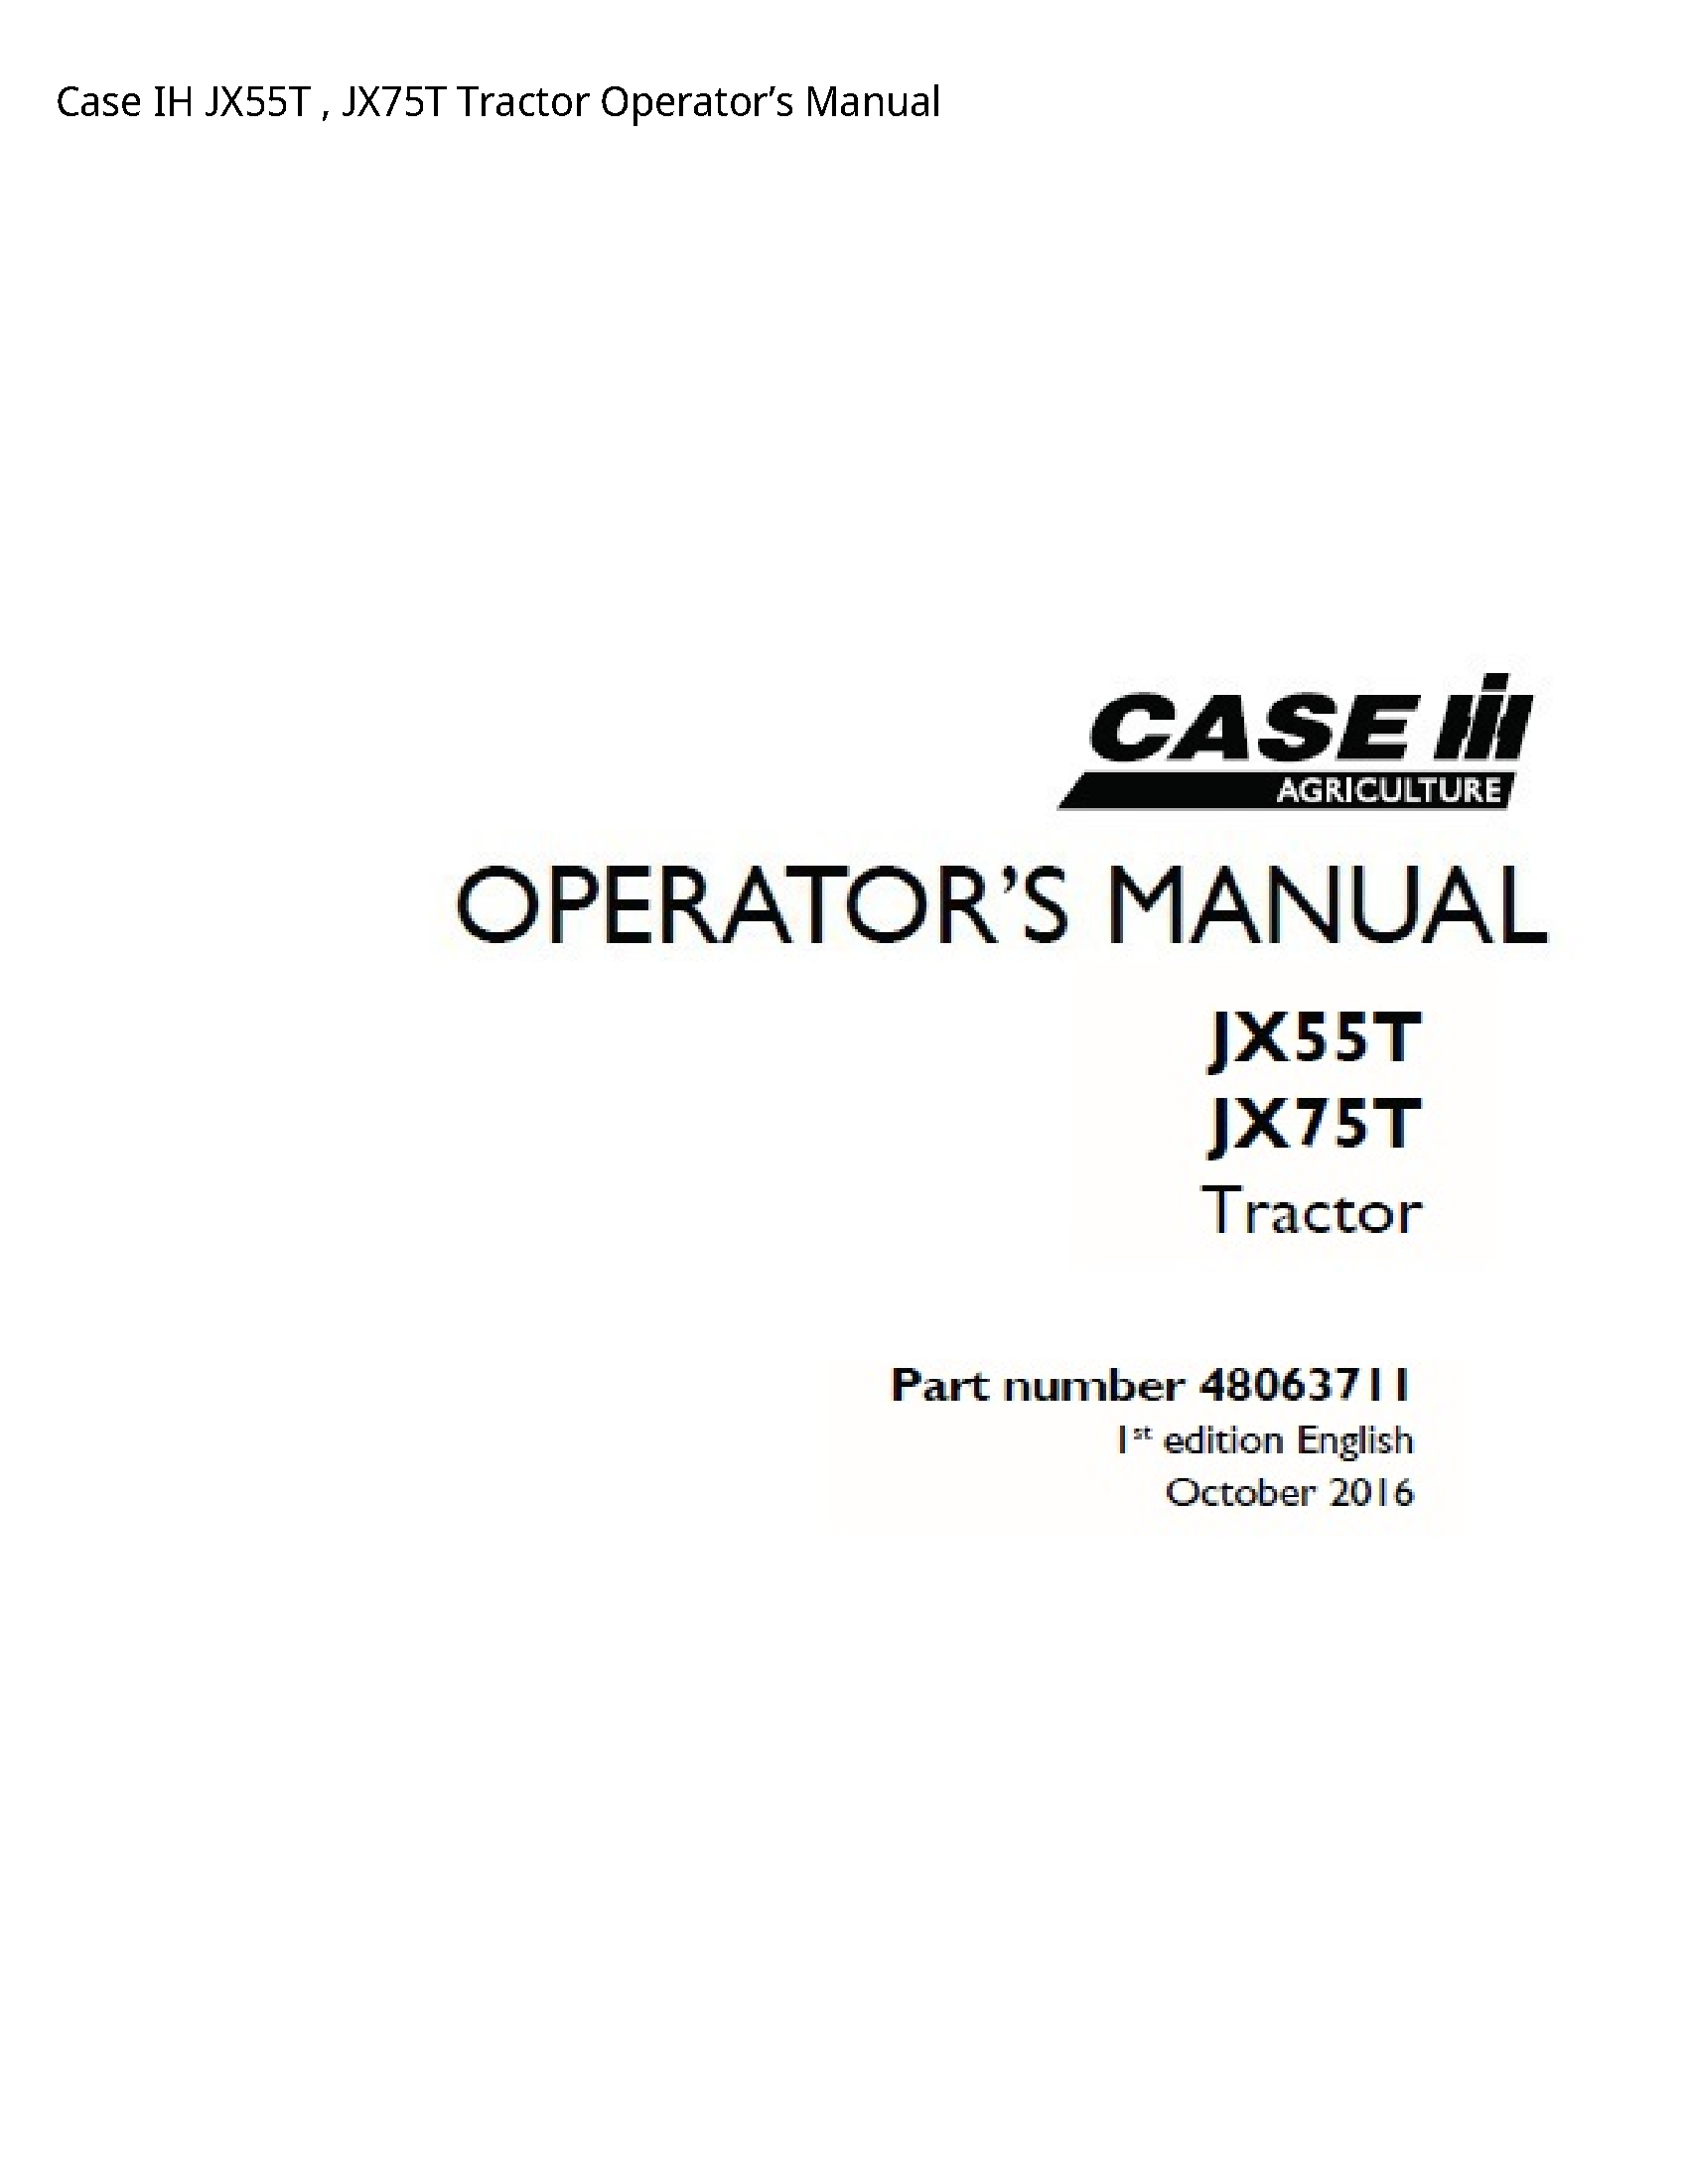 Case/Case IH JX55T IH Tractor Operator’s manual